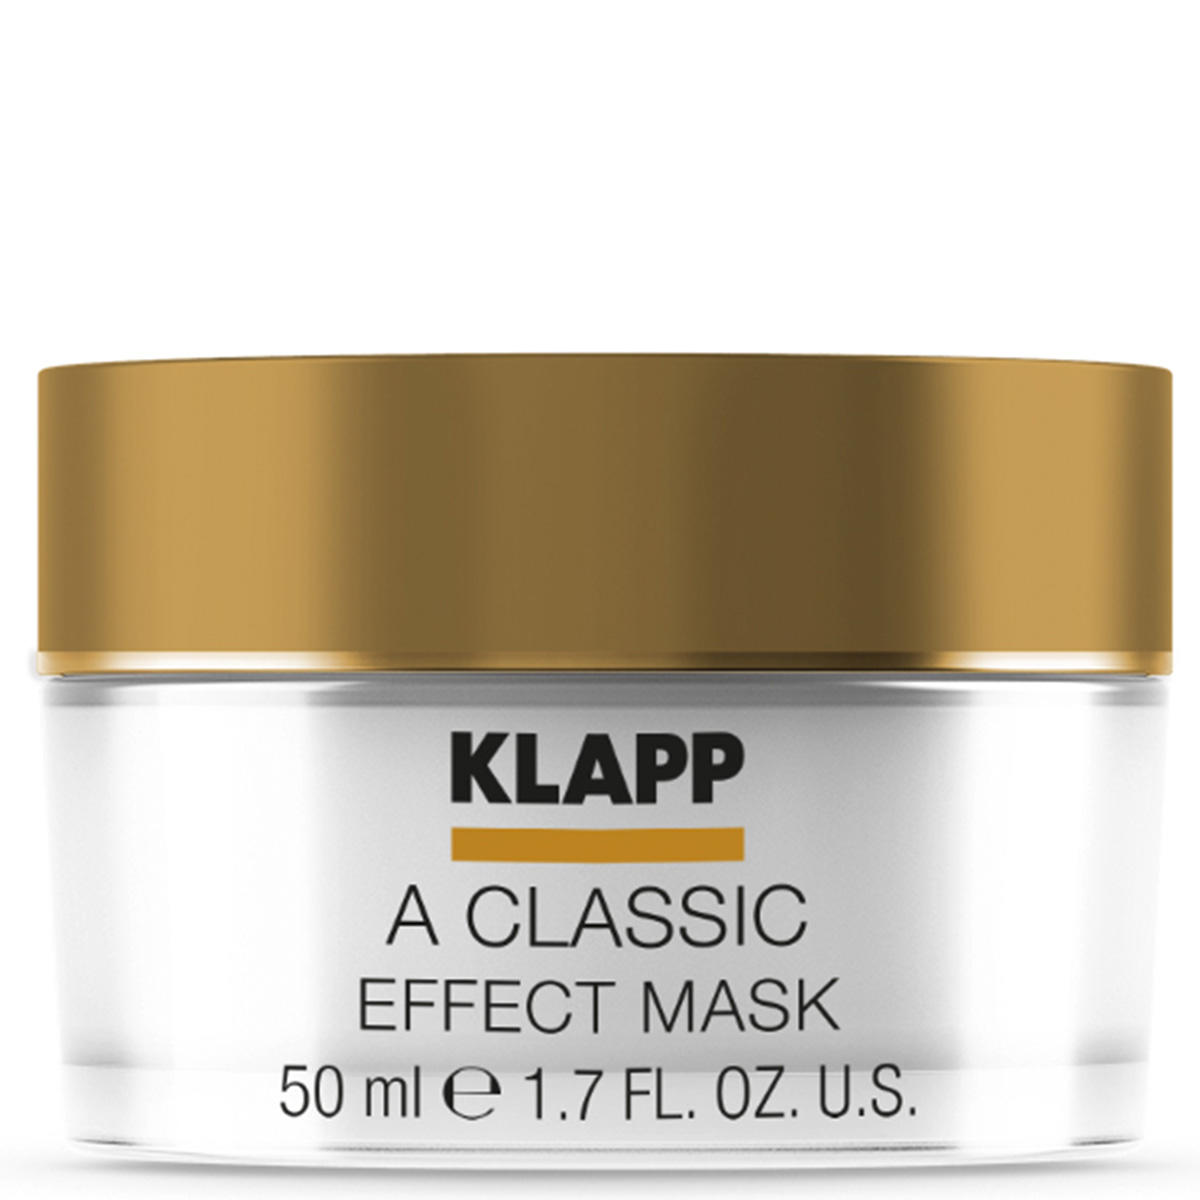 KLAPP A CLASSIC Effect Mask 50 ml - 1